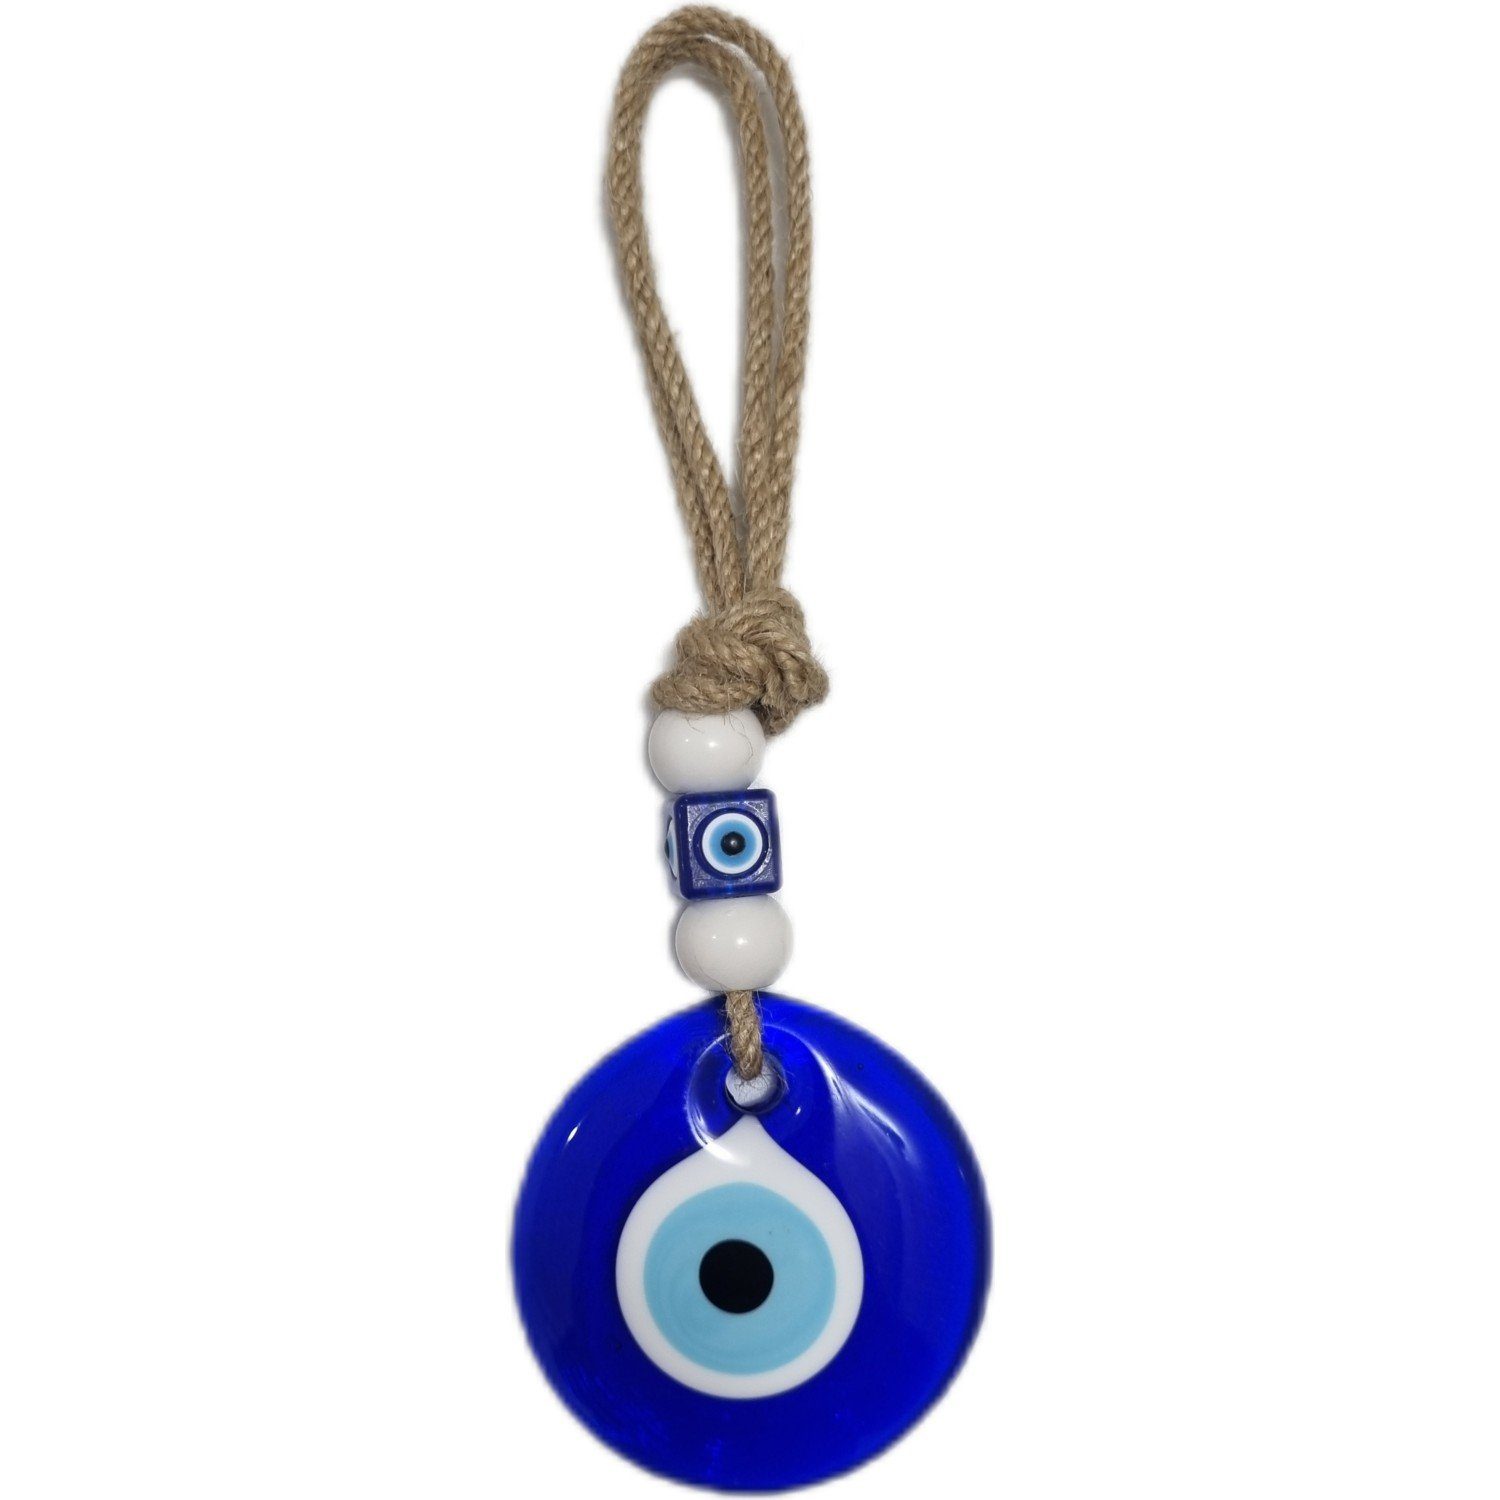 Özberk Hängedekoration Nazar boncuk-1 (Packung, 1 St., 1 teilig), Nazar  Boncuk Boncugu, Evil Eye Wandbehang Boese Auge,Türkisch Blau Auge